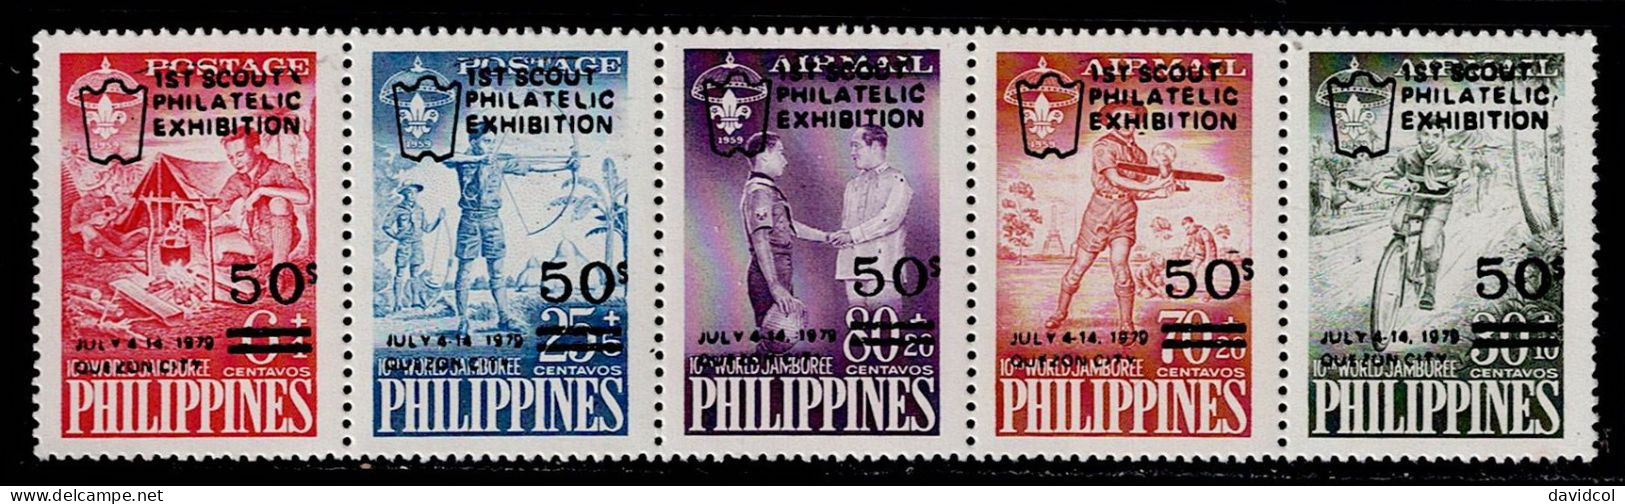 FIL-02- PHILIPPINES - 1979 - MNH -SCOUTS- STRIP - 1ST SCOUT PHILATELIC EXHIBITION - Philippinen